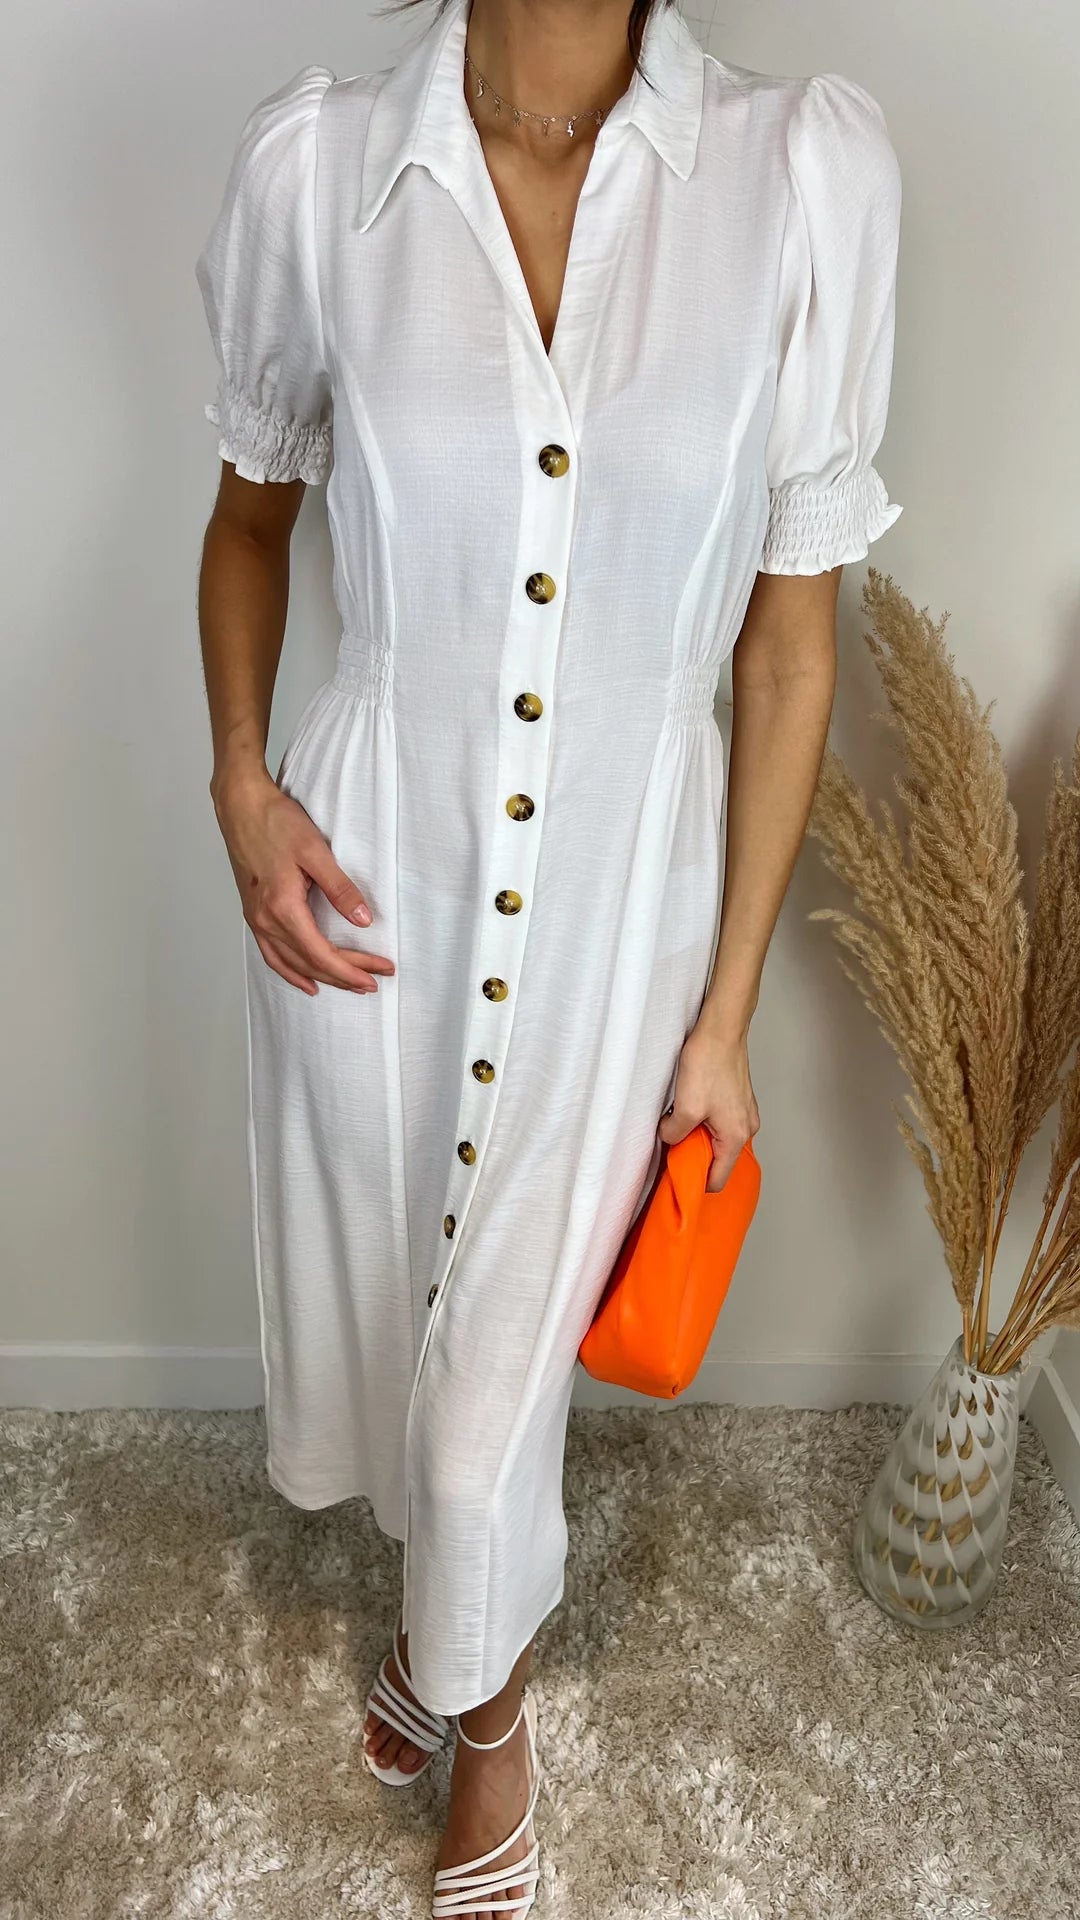 jenerique-white-jersey-dress